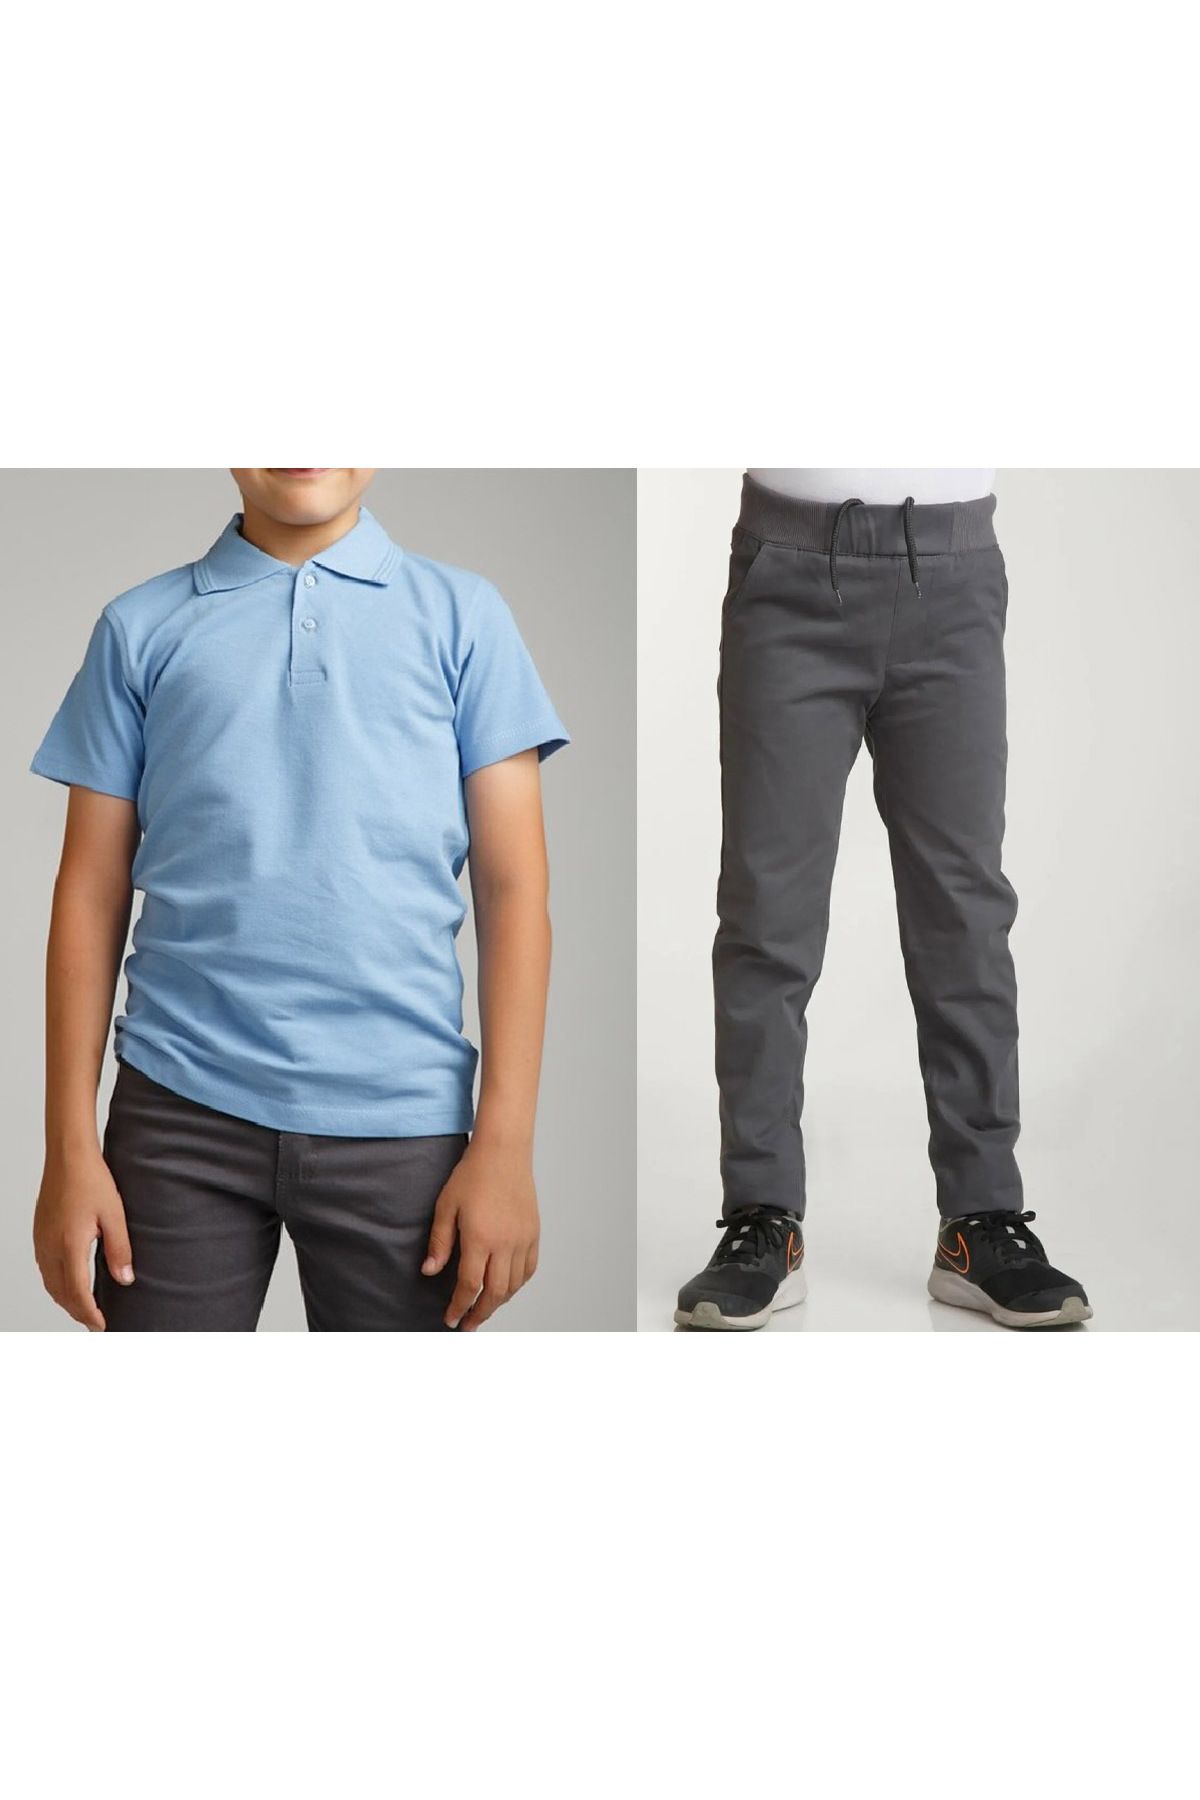 FATELLA Unisex çocuk okul açık gri ribana bel pantolon - kısa kol Polo yaka t-shirt 2li takım